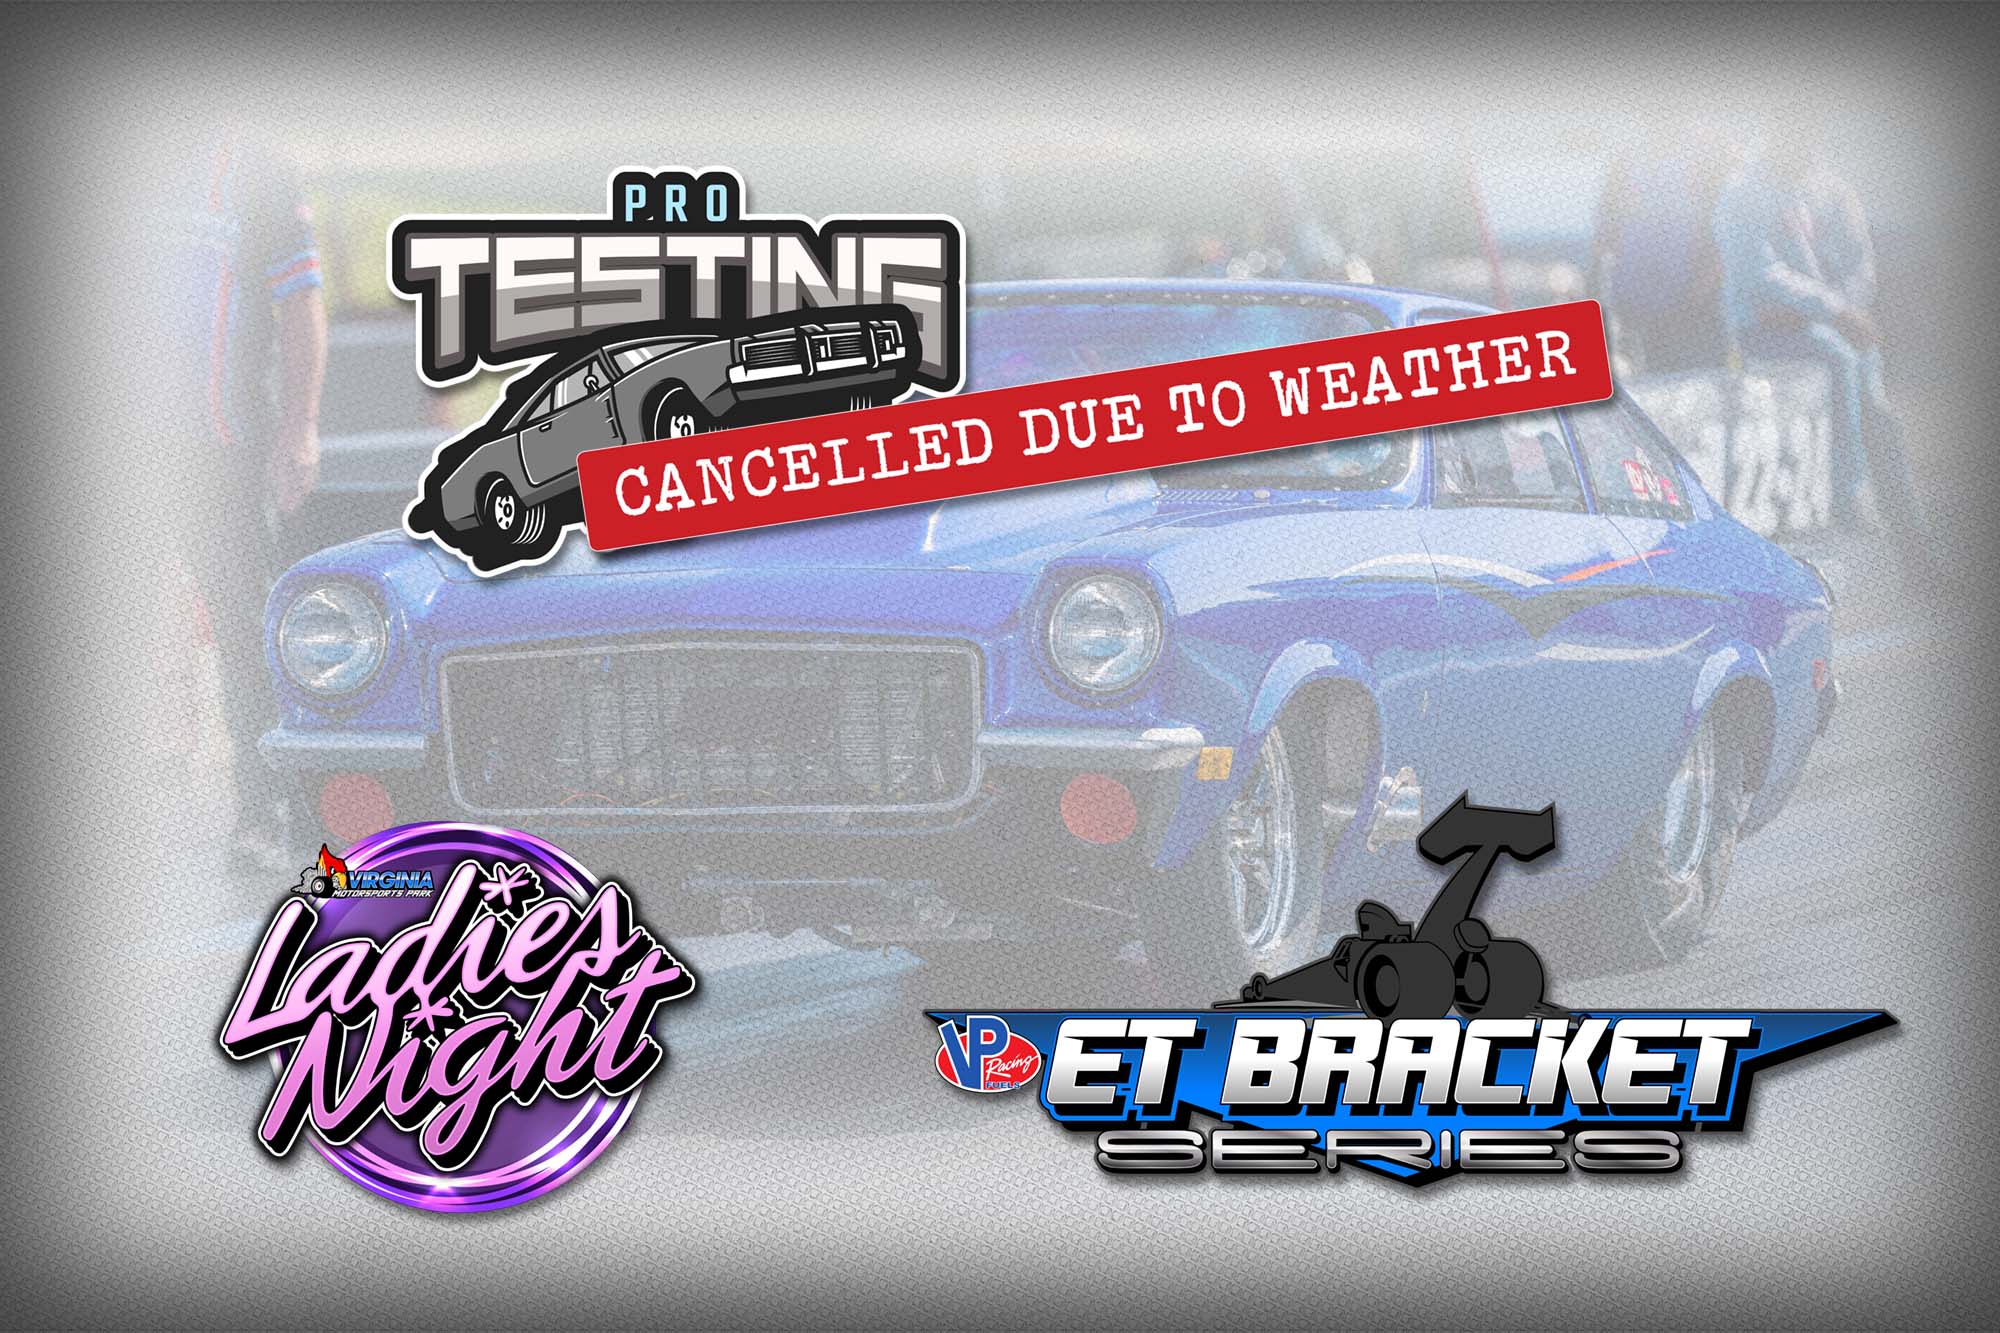 Pro Test Session Cancelled, Ladies Night & VP Fuels ET Bracket Series On Go!